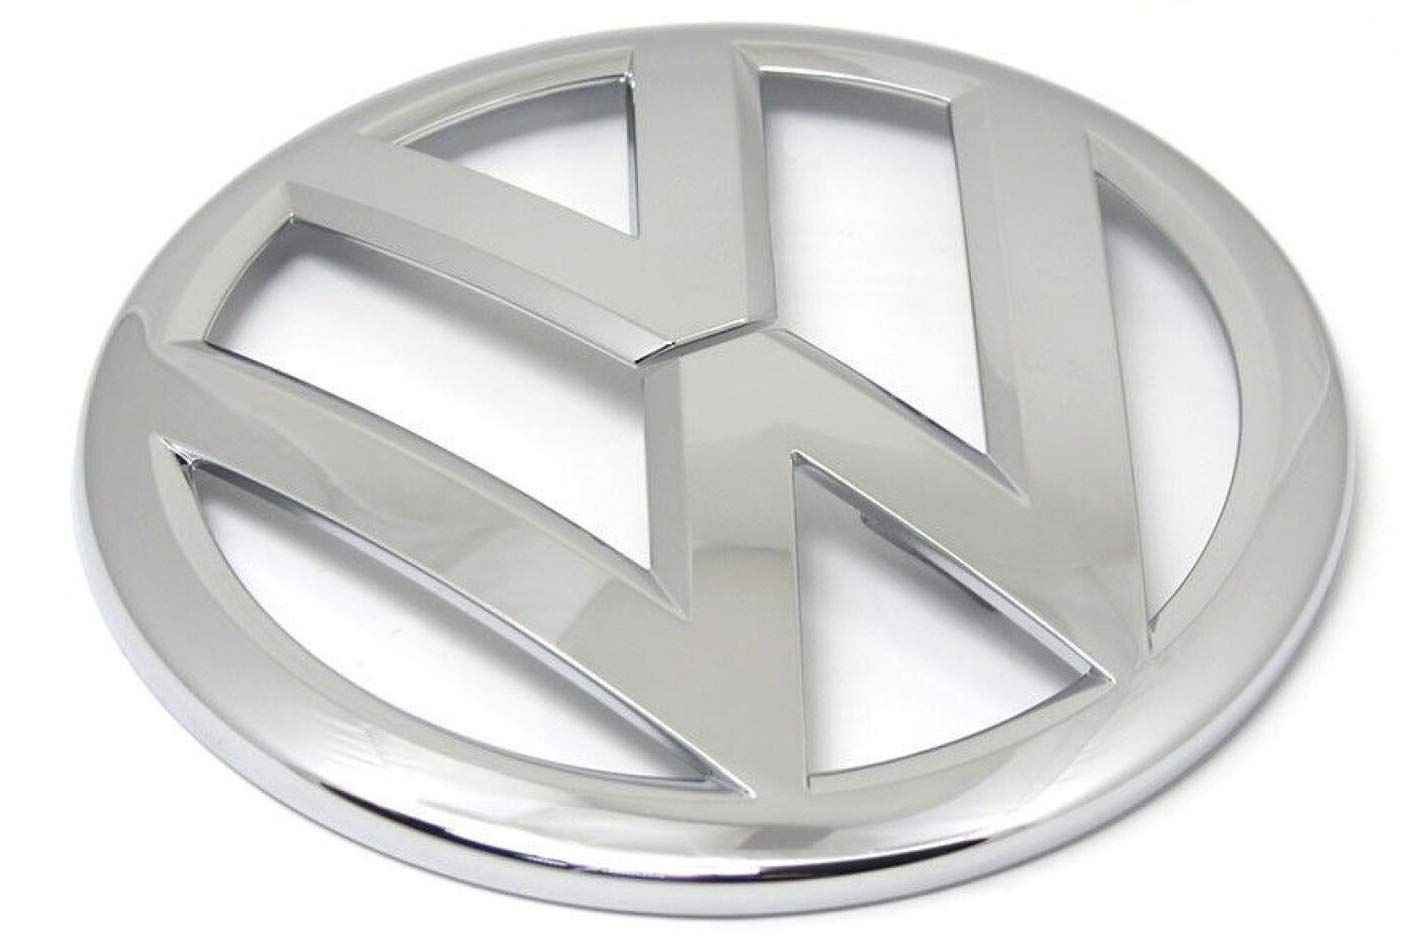 Volkswagen Genuine OEM Front Grille Emblem fits Golf GTI SportWagen Alltrack MK7 2015-17 | Amazon (US)